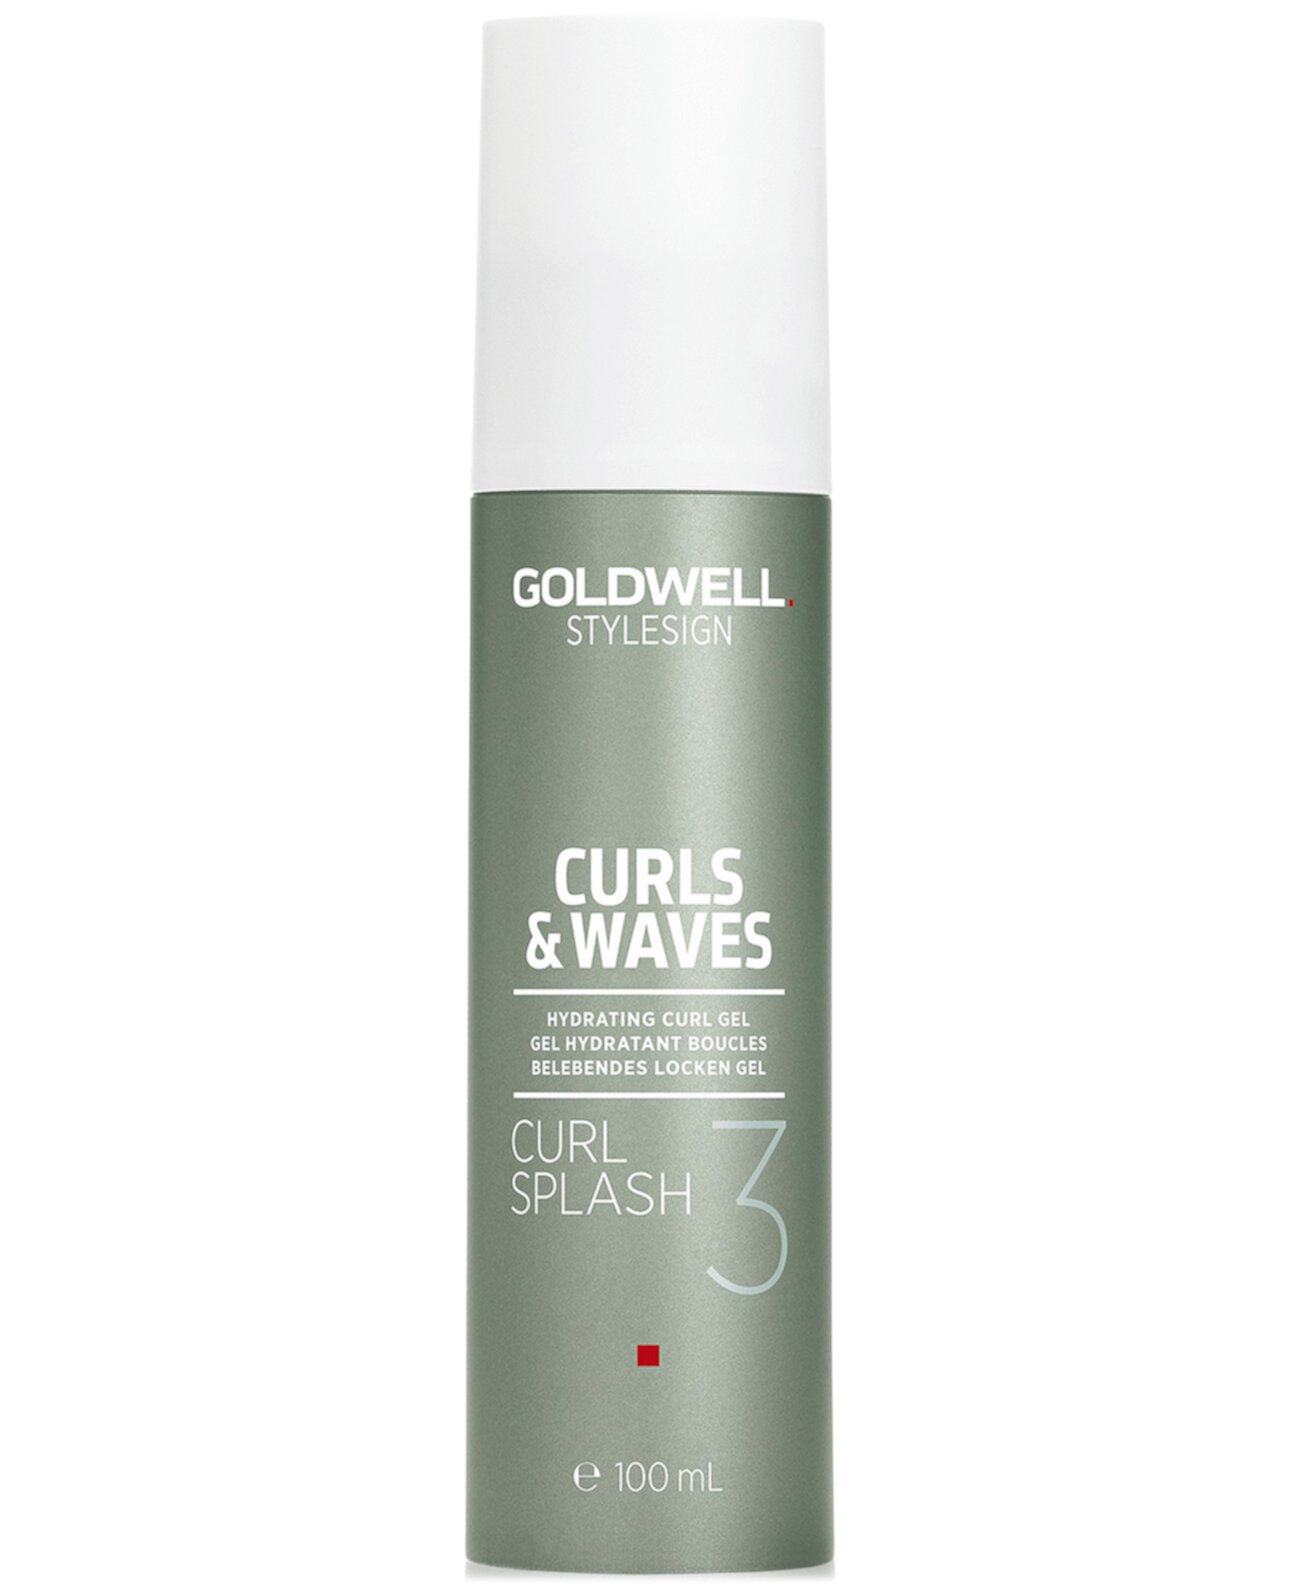 Увлажняющий гель для завивки волос StyleSign Curls & Waves Curl Splash, 3,38 унции, от PUREBEAUTY Salon & Spa Goldwell